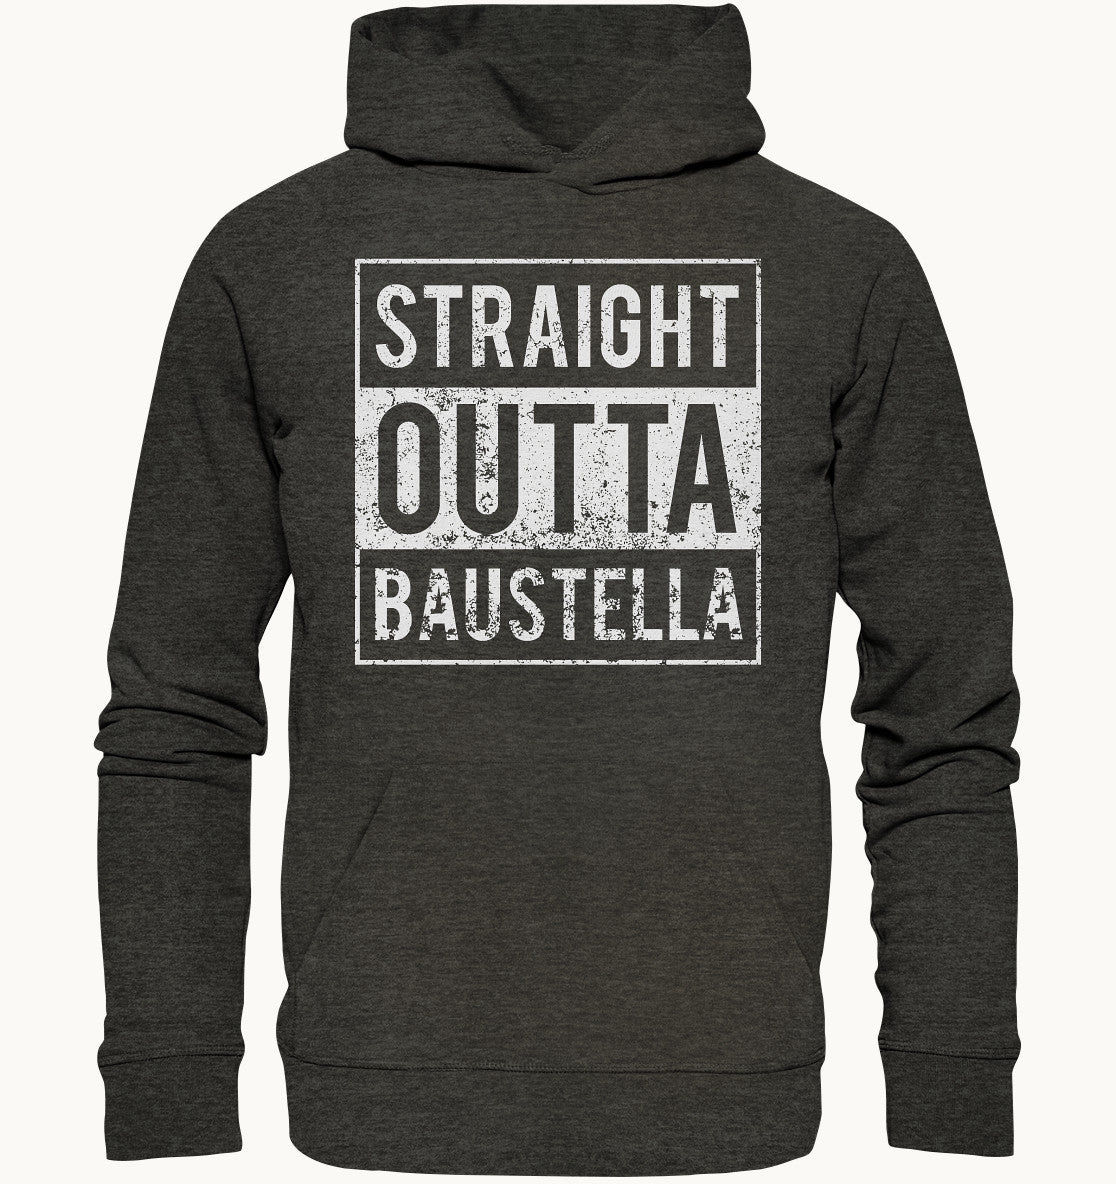 Straight outta Baustella - Organic   Hoodie